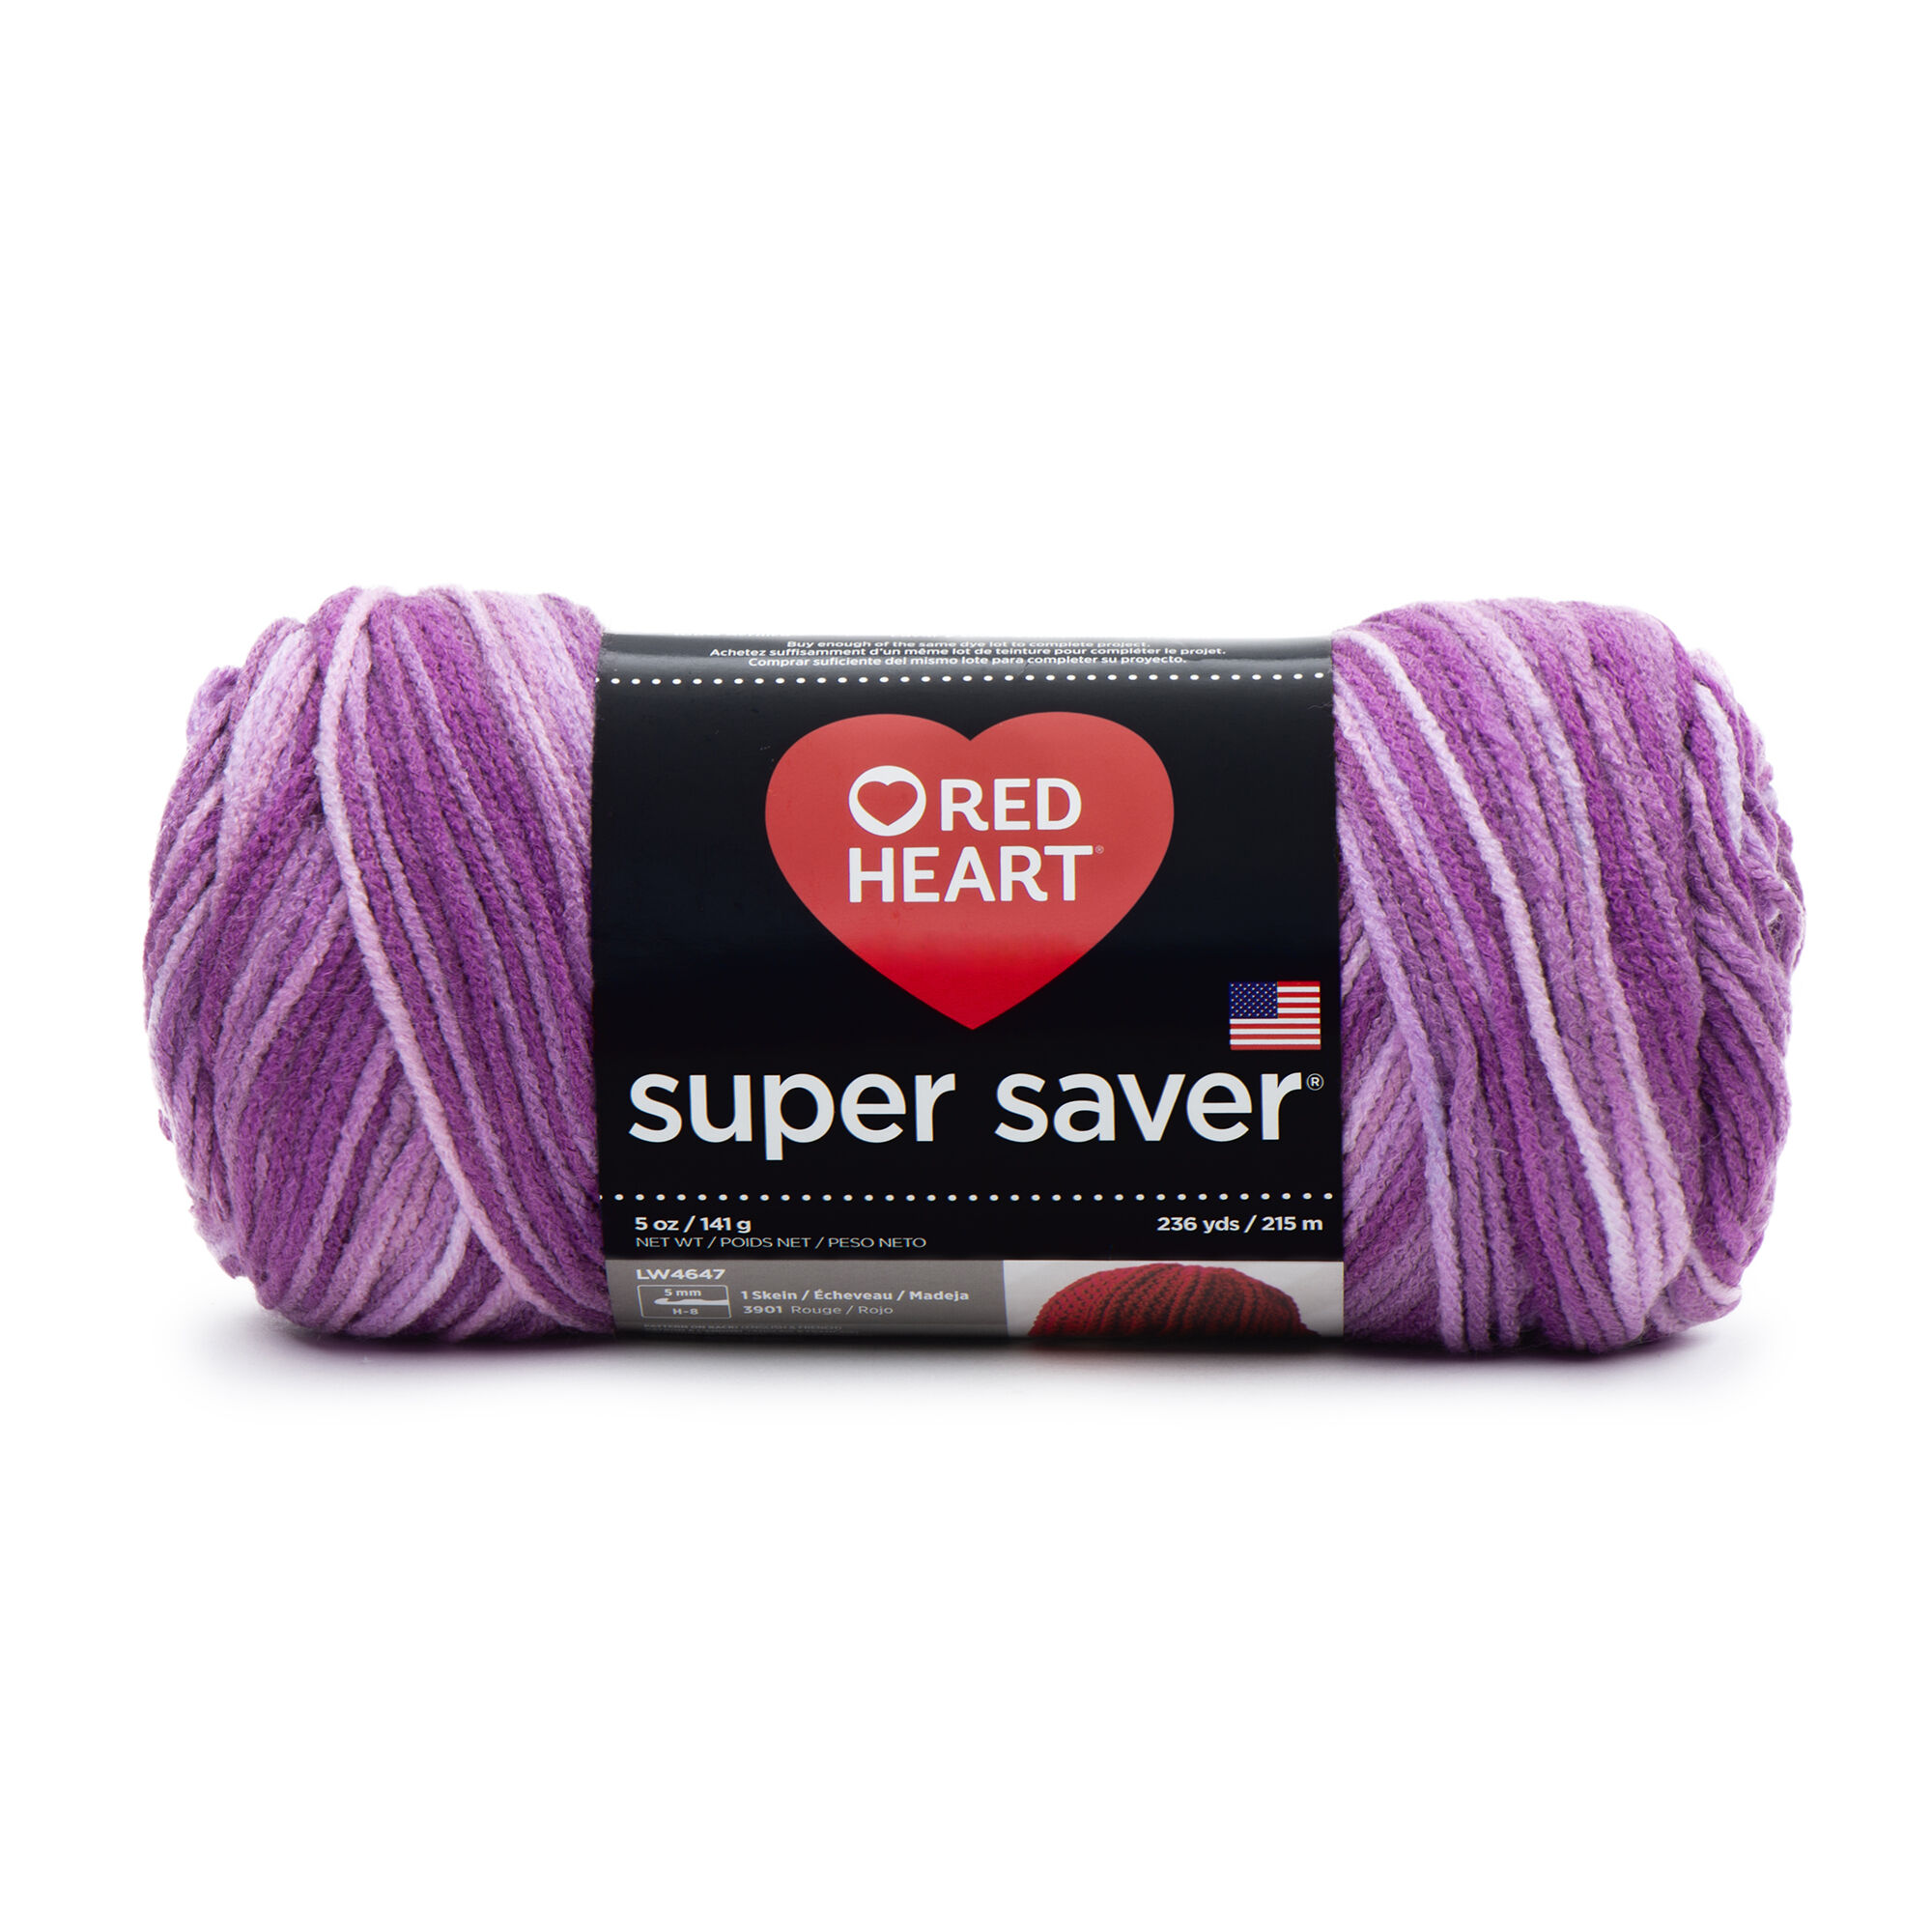 Red Heart® Super Saver® #4 Medium Acrylic Yarn, Purple Tones 5oz/142g, 236 Yards - image 1 of 6